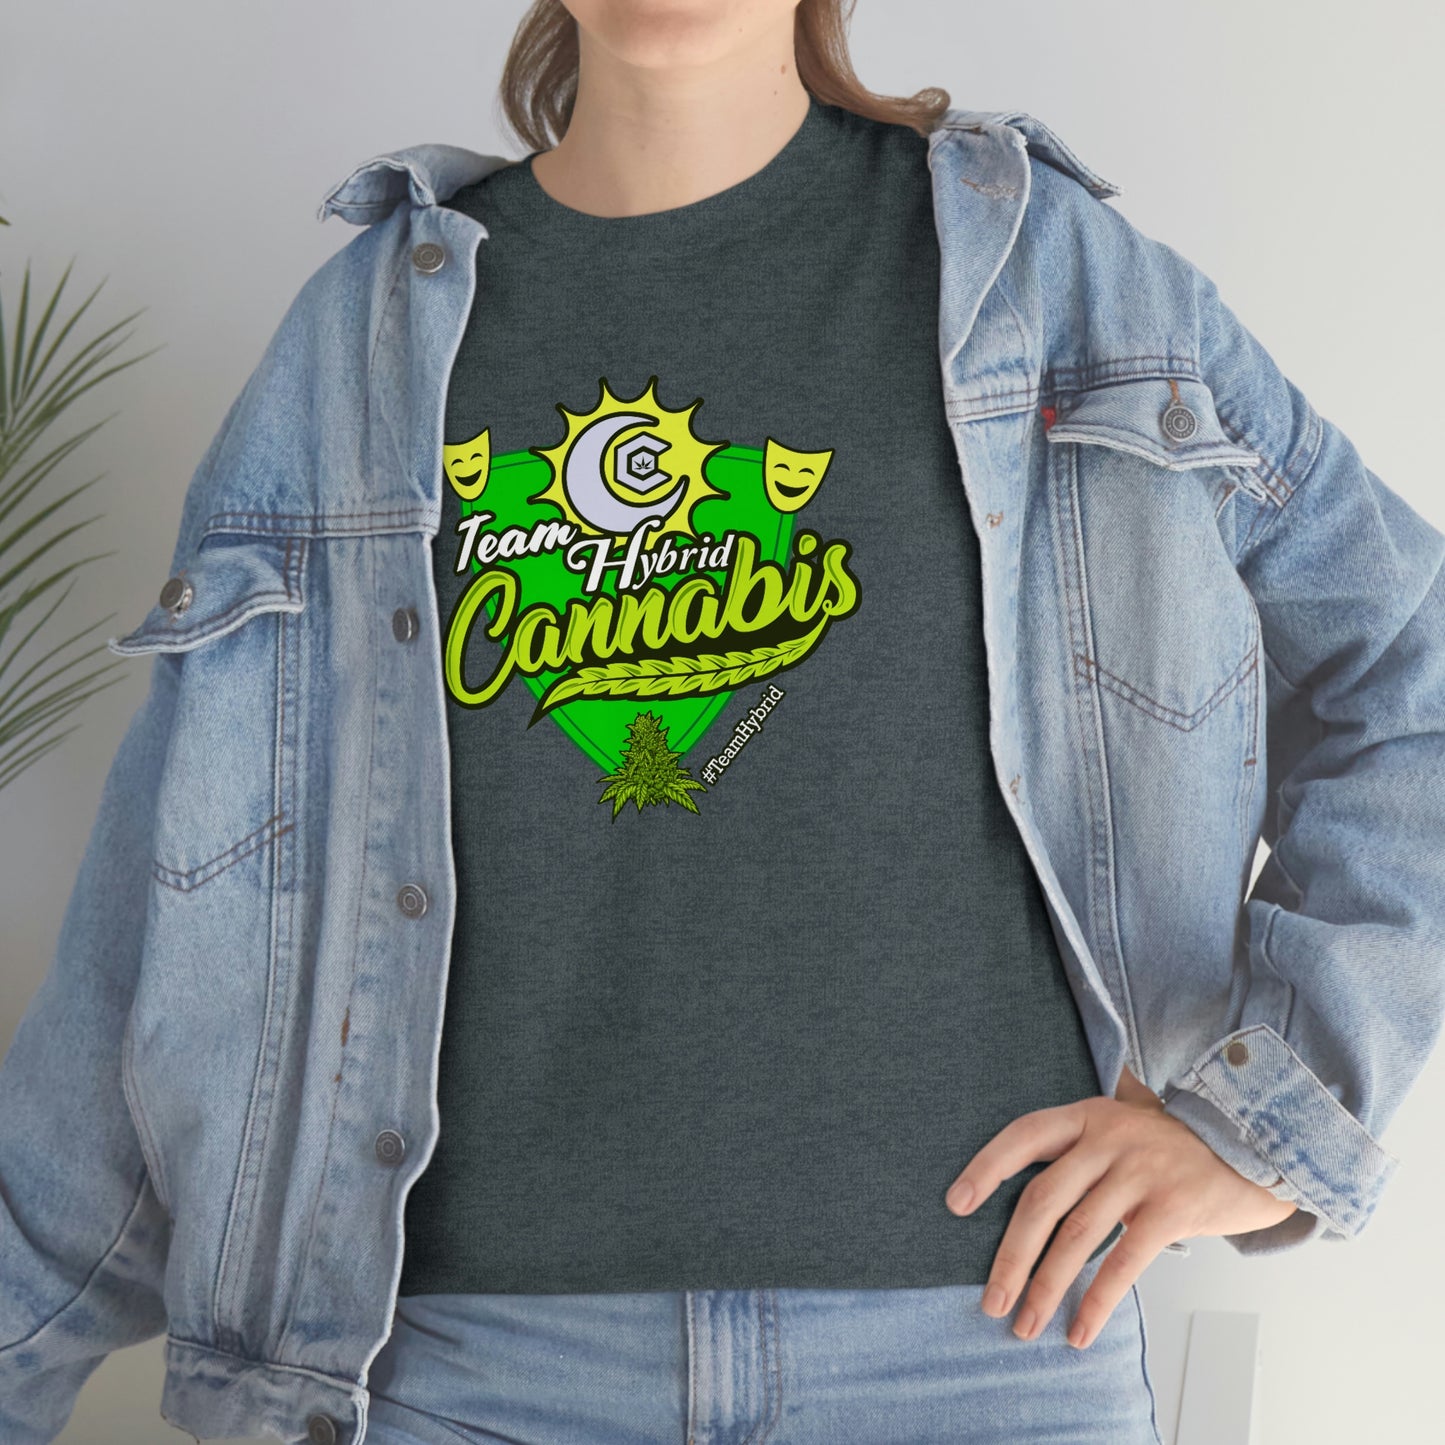 A woman wearing a team hybrid cannabis t-shirt and jean jacket